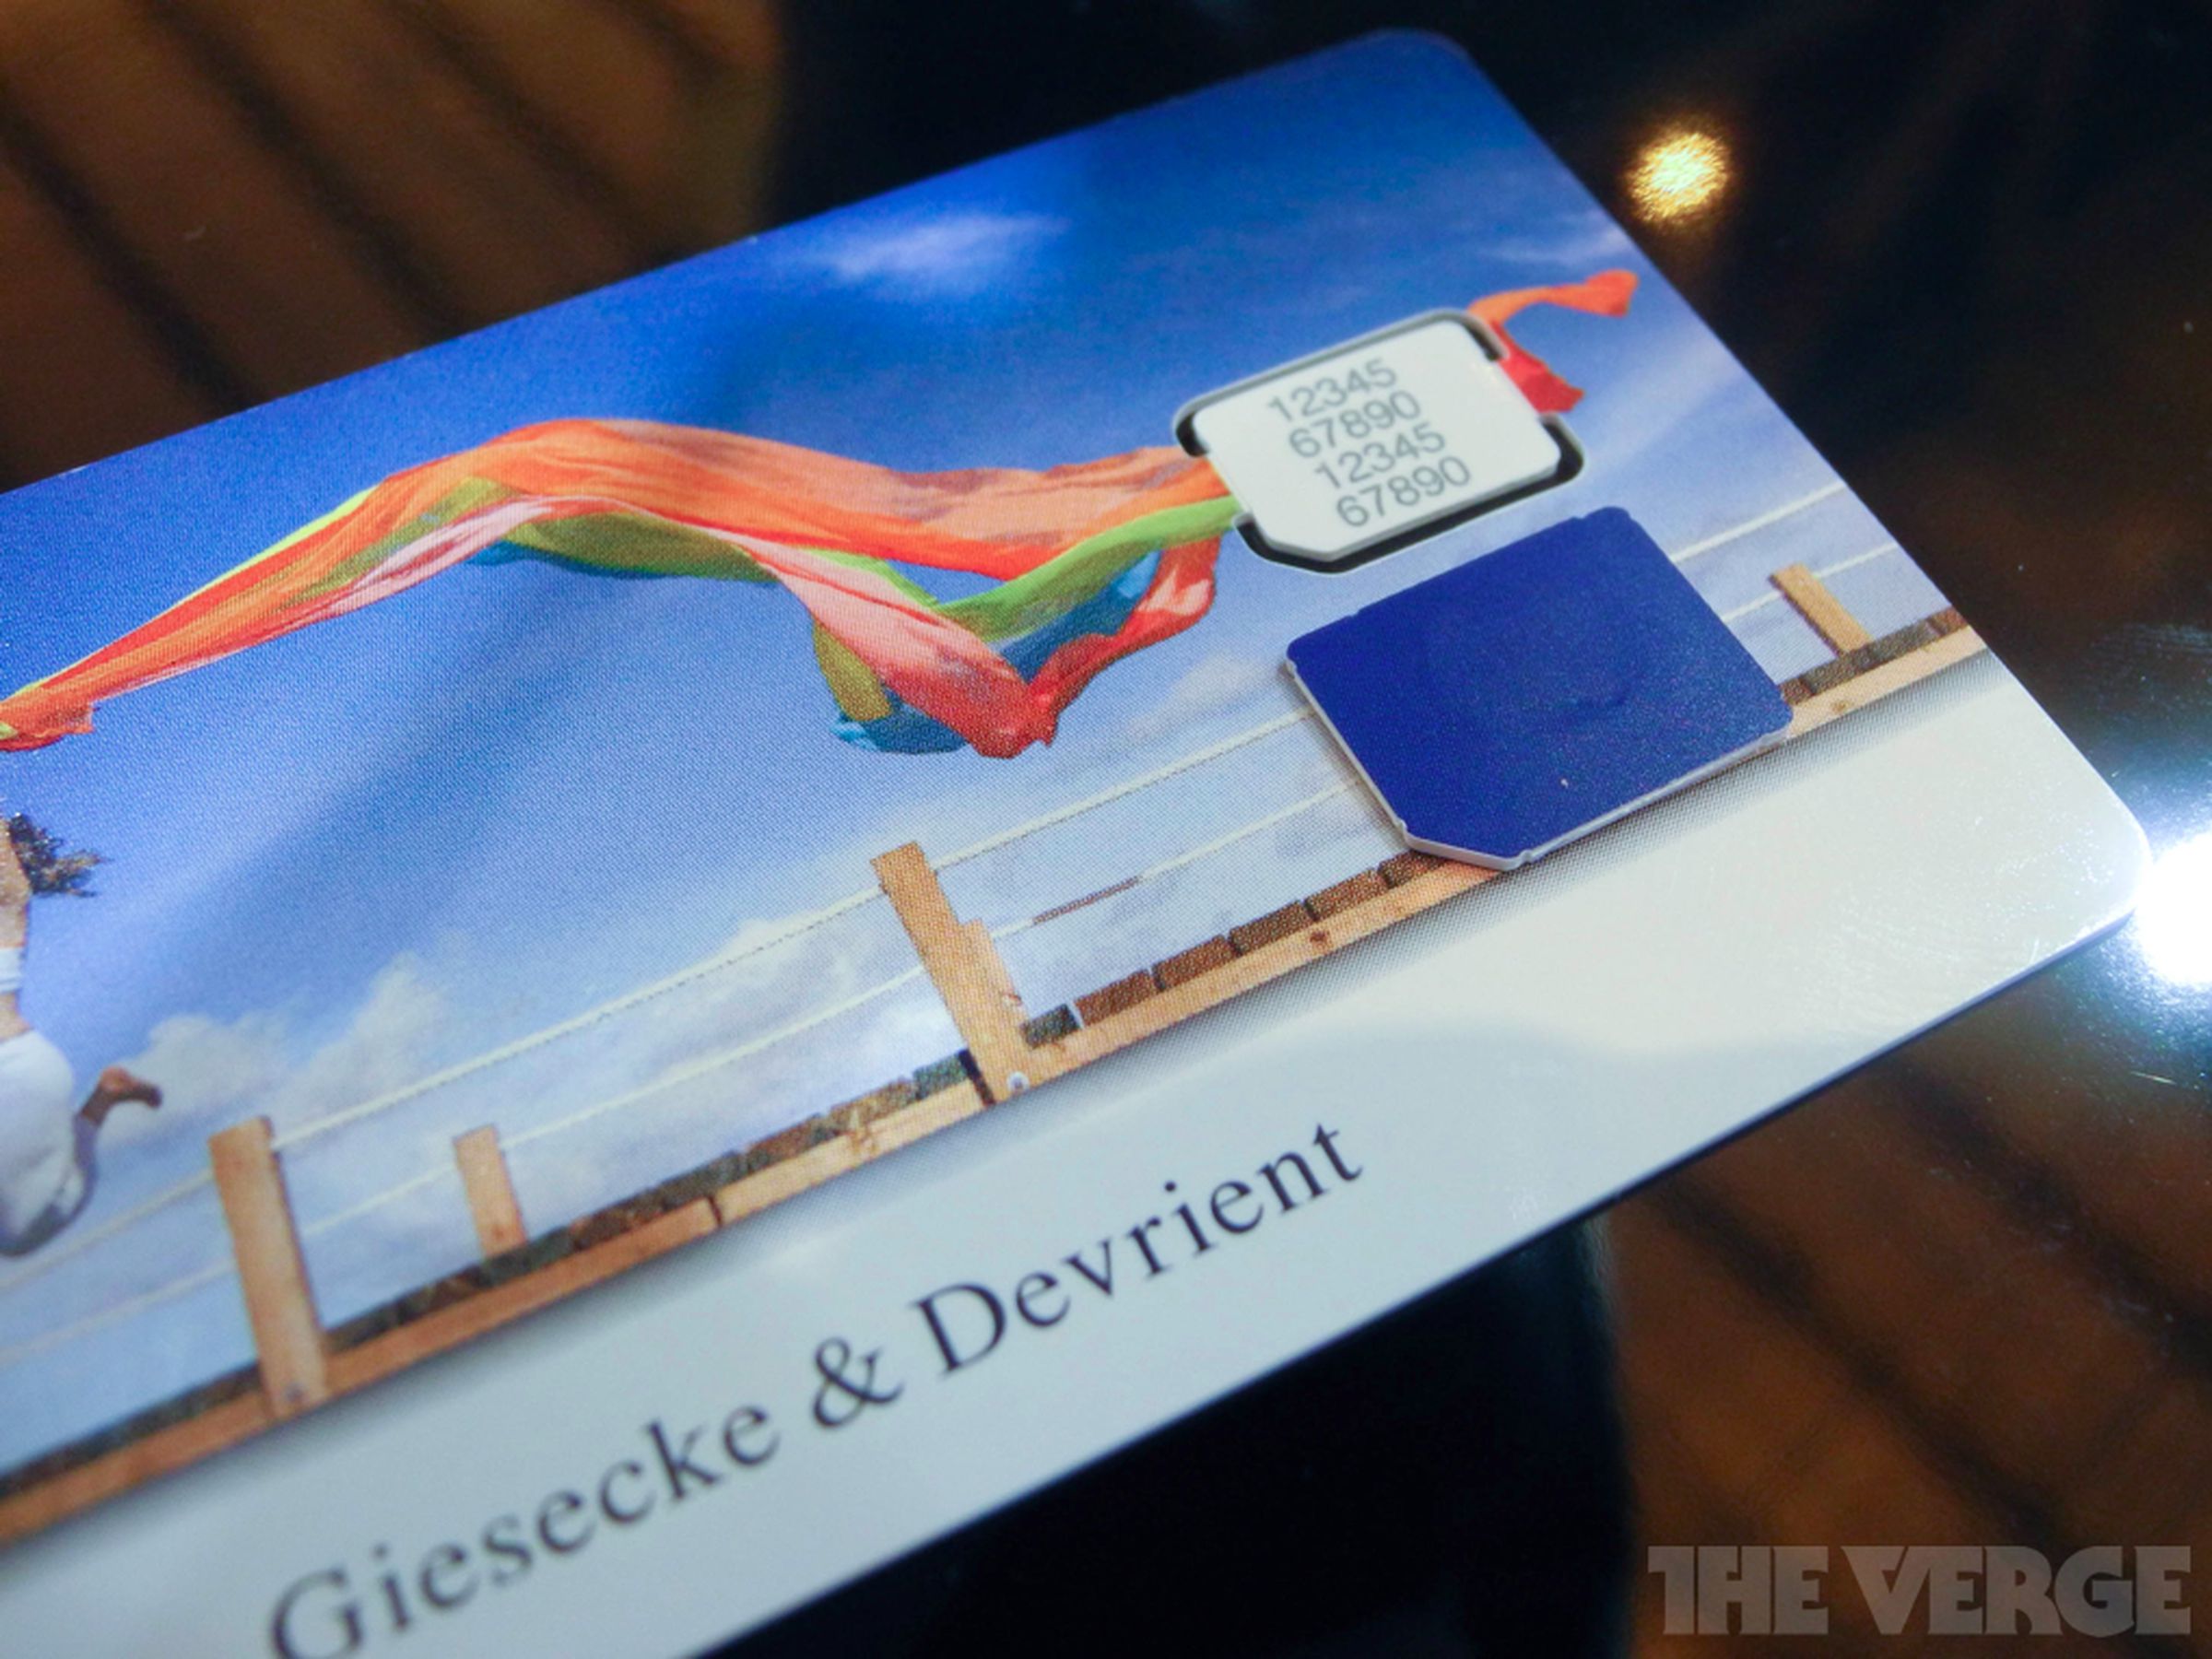 Apple's nano-SIM design from Giesecke & Devrient